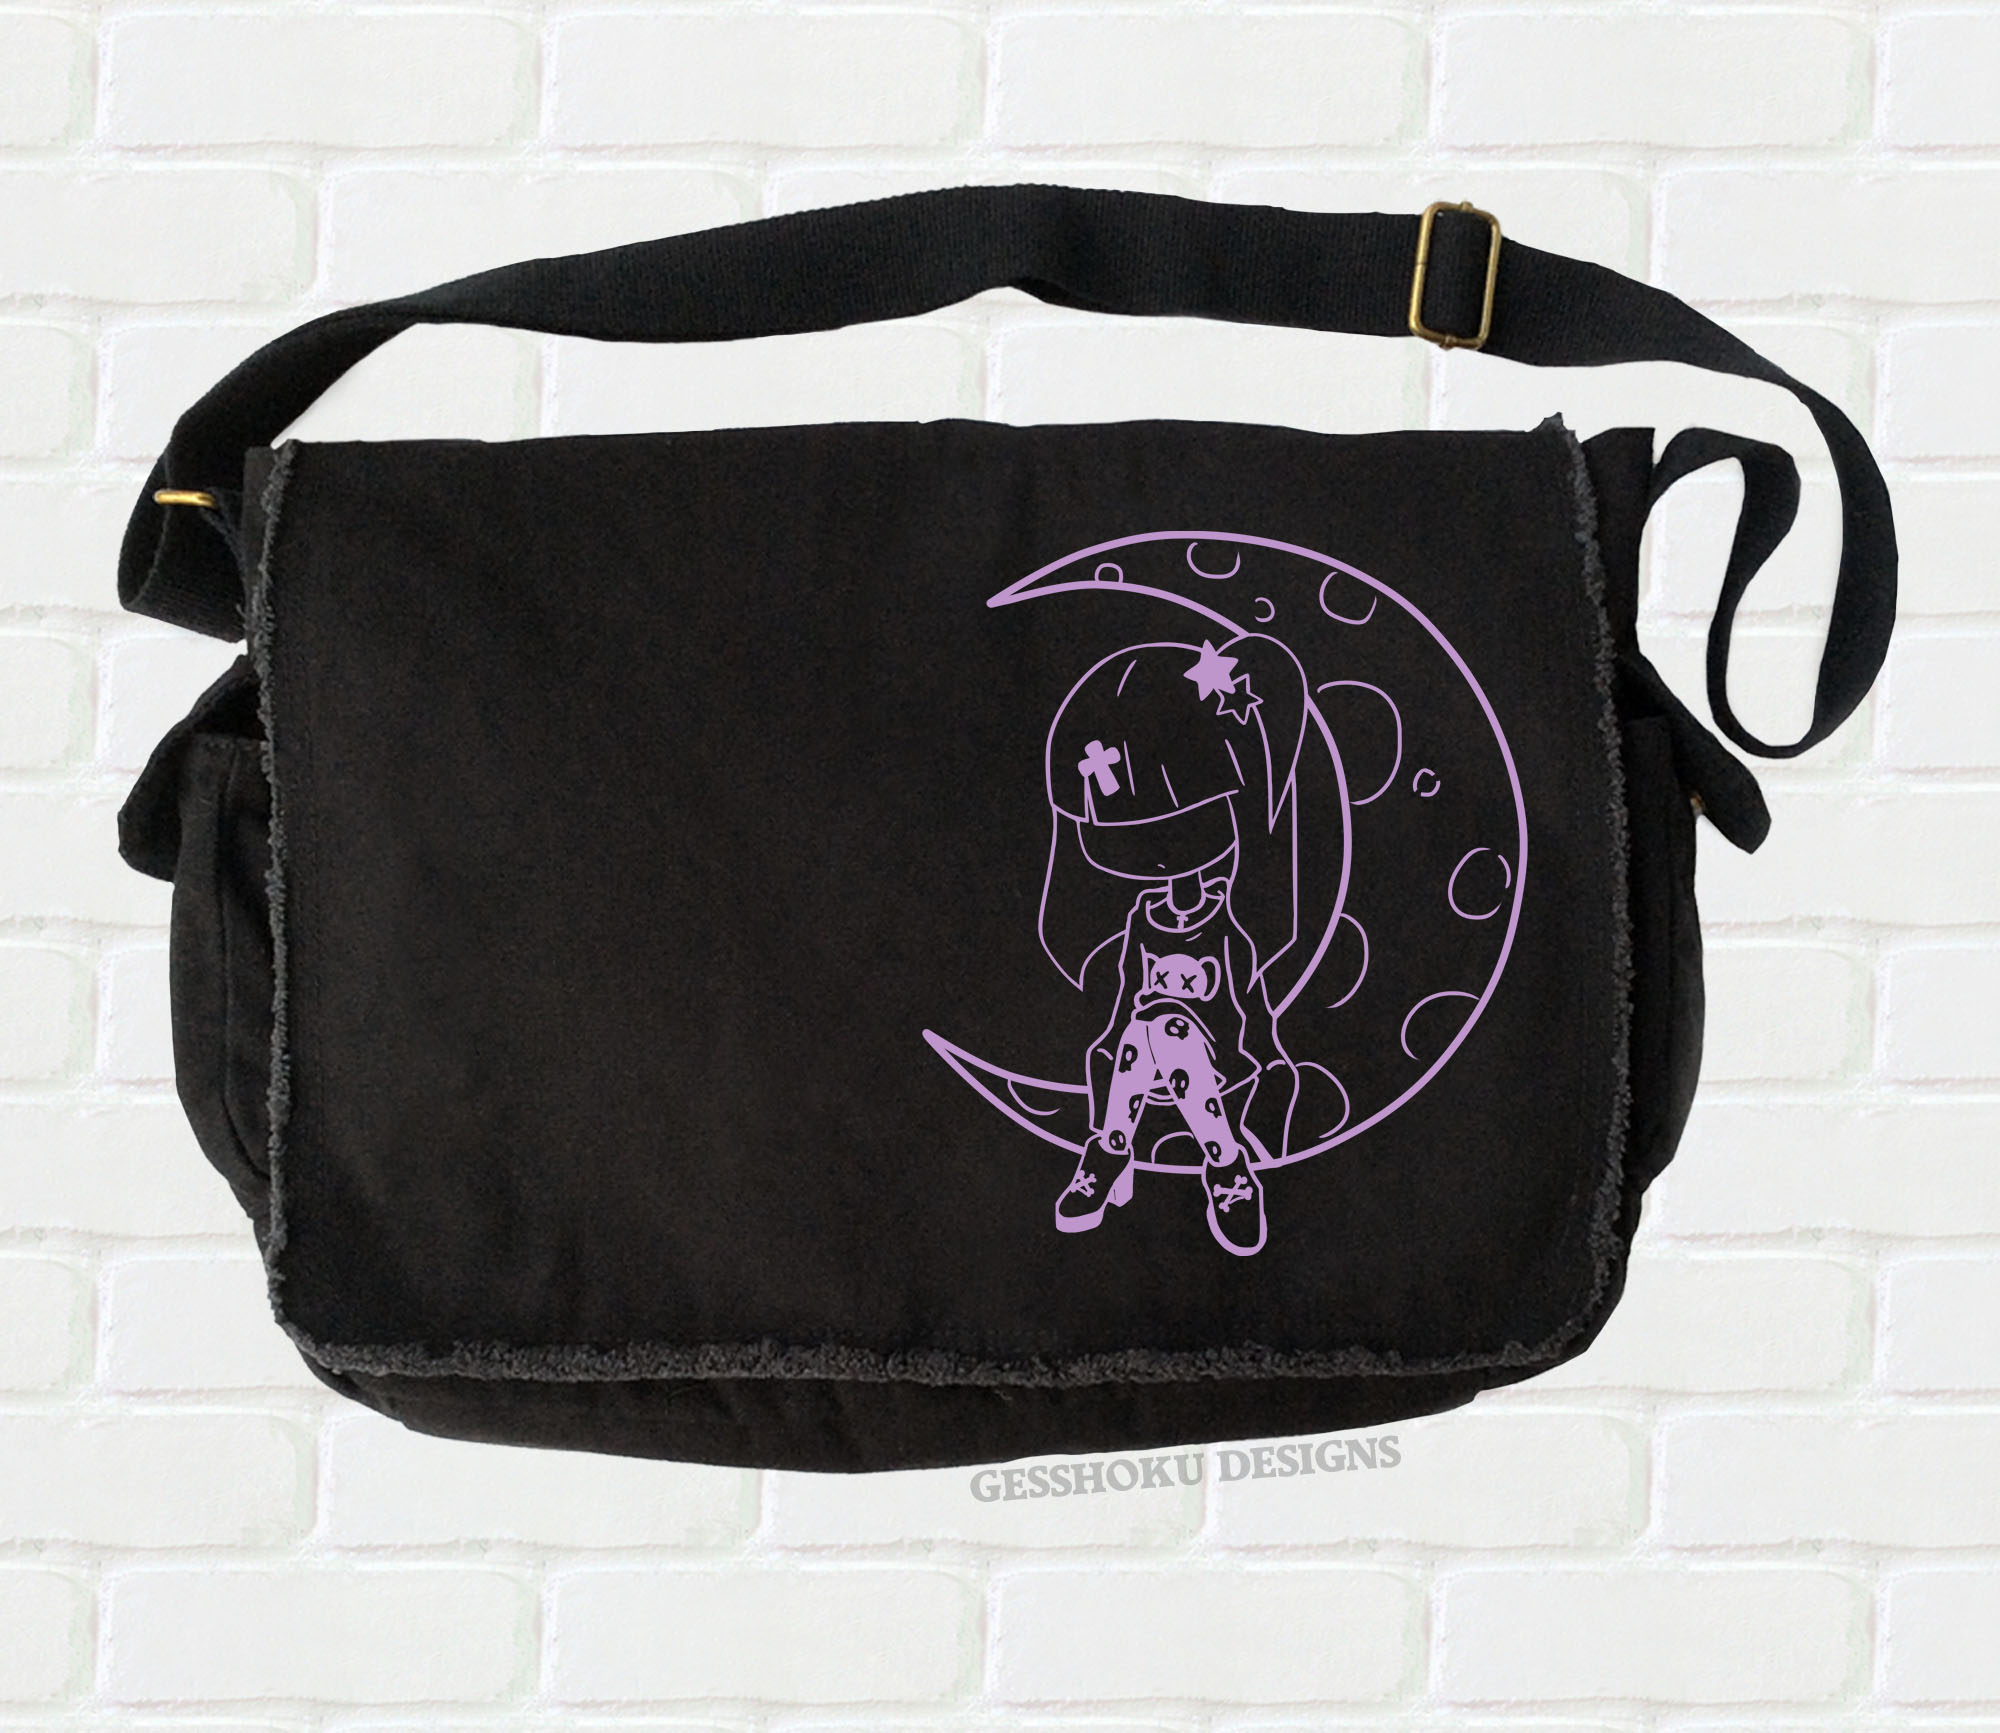 Pastel Moon Messenger Bag - Black/Purple